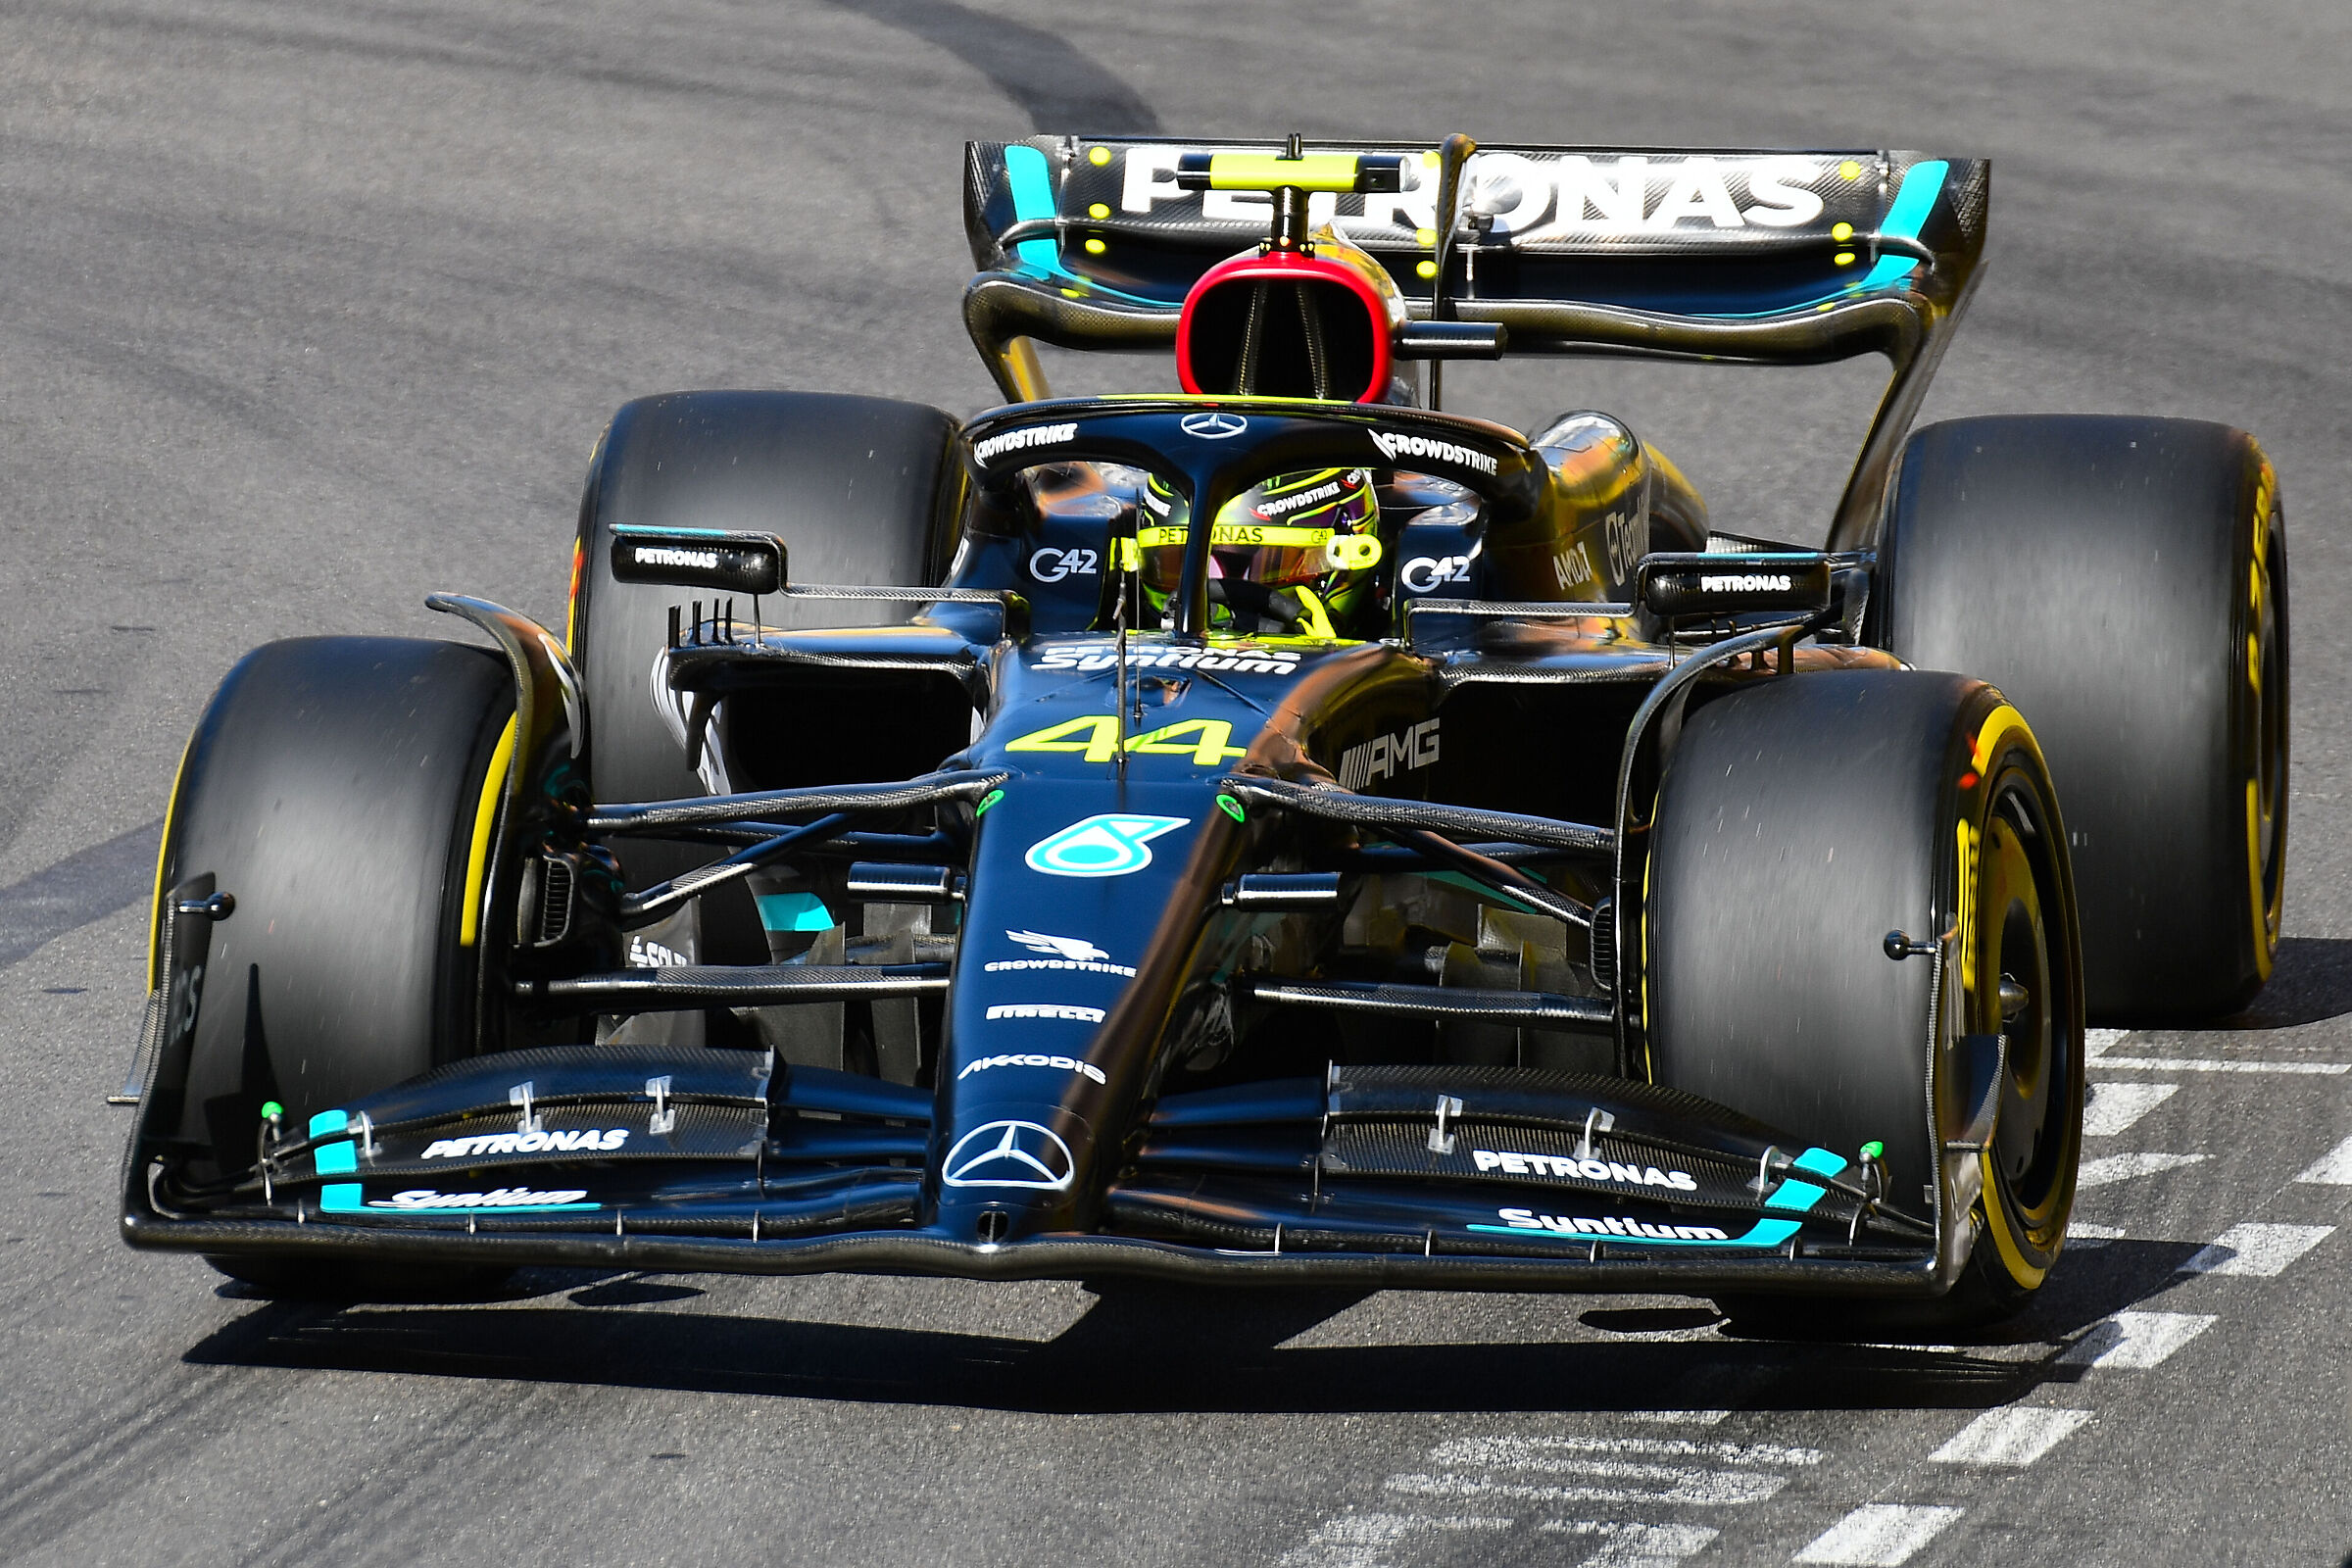 2023 - Lewis Hamilton Mercedes #44...